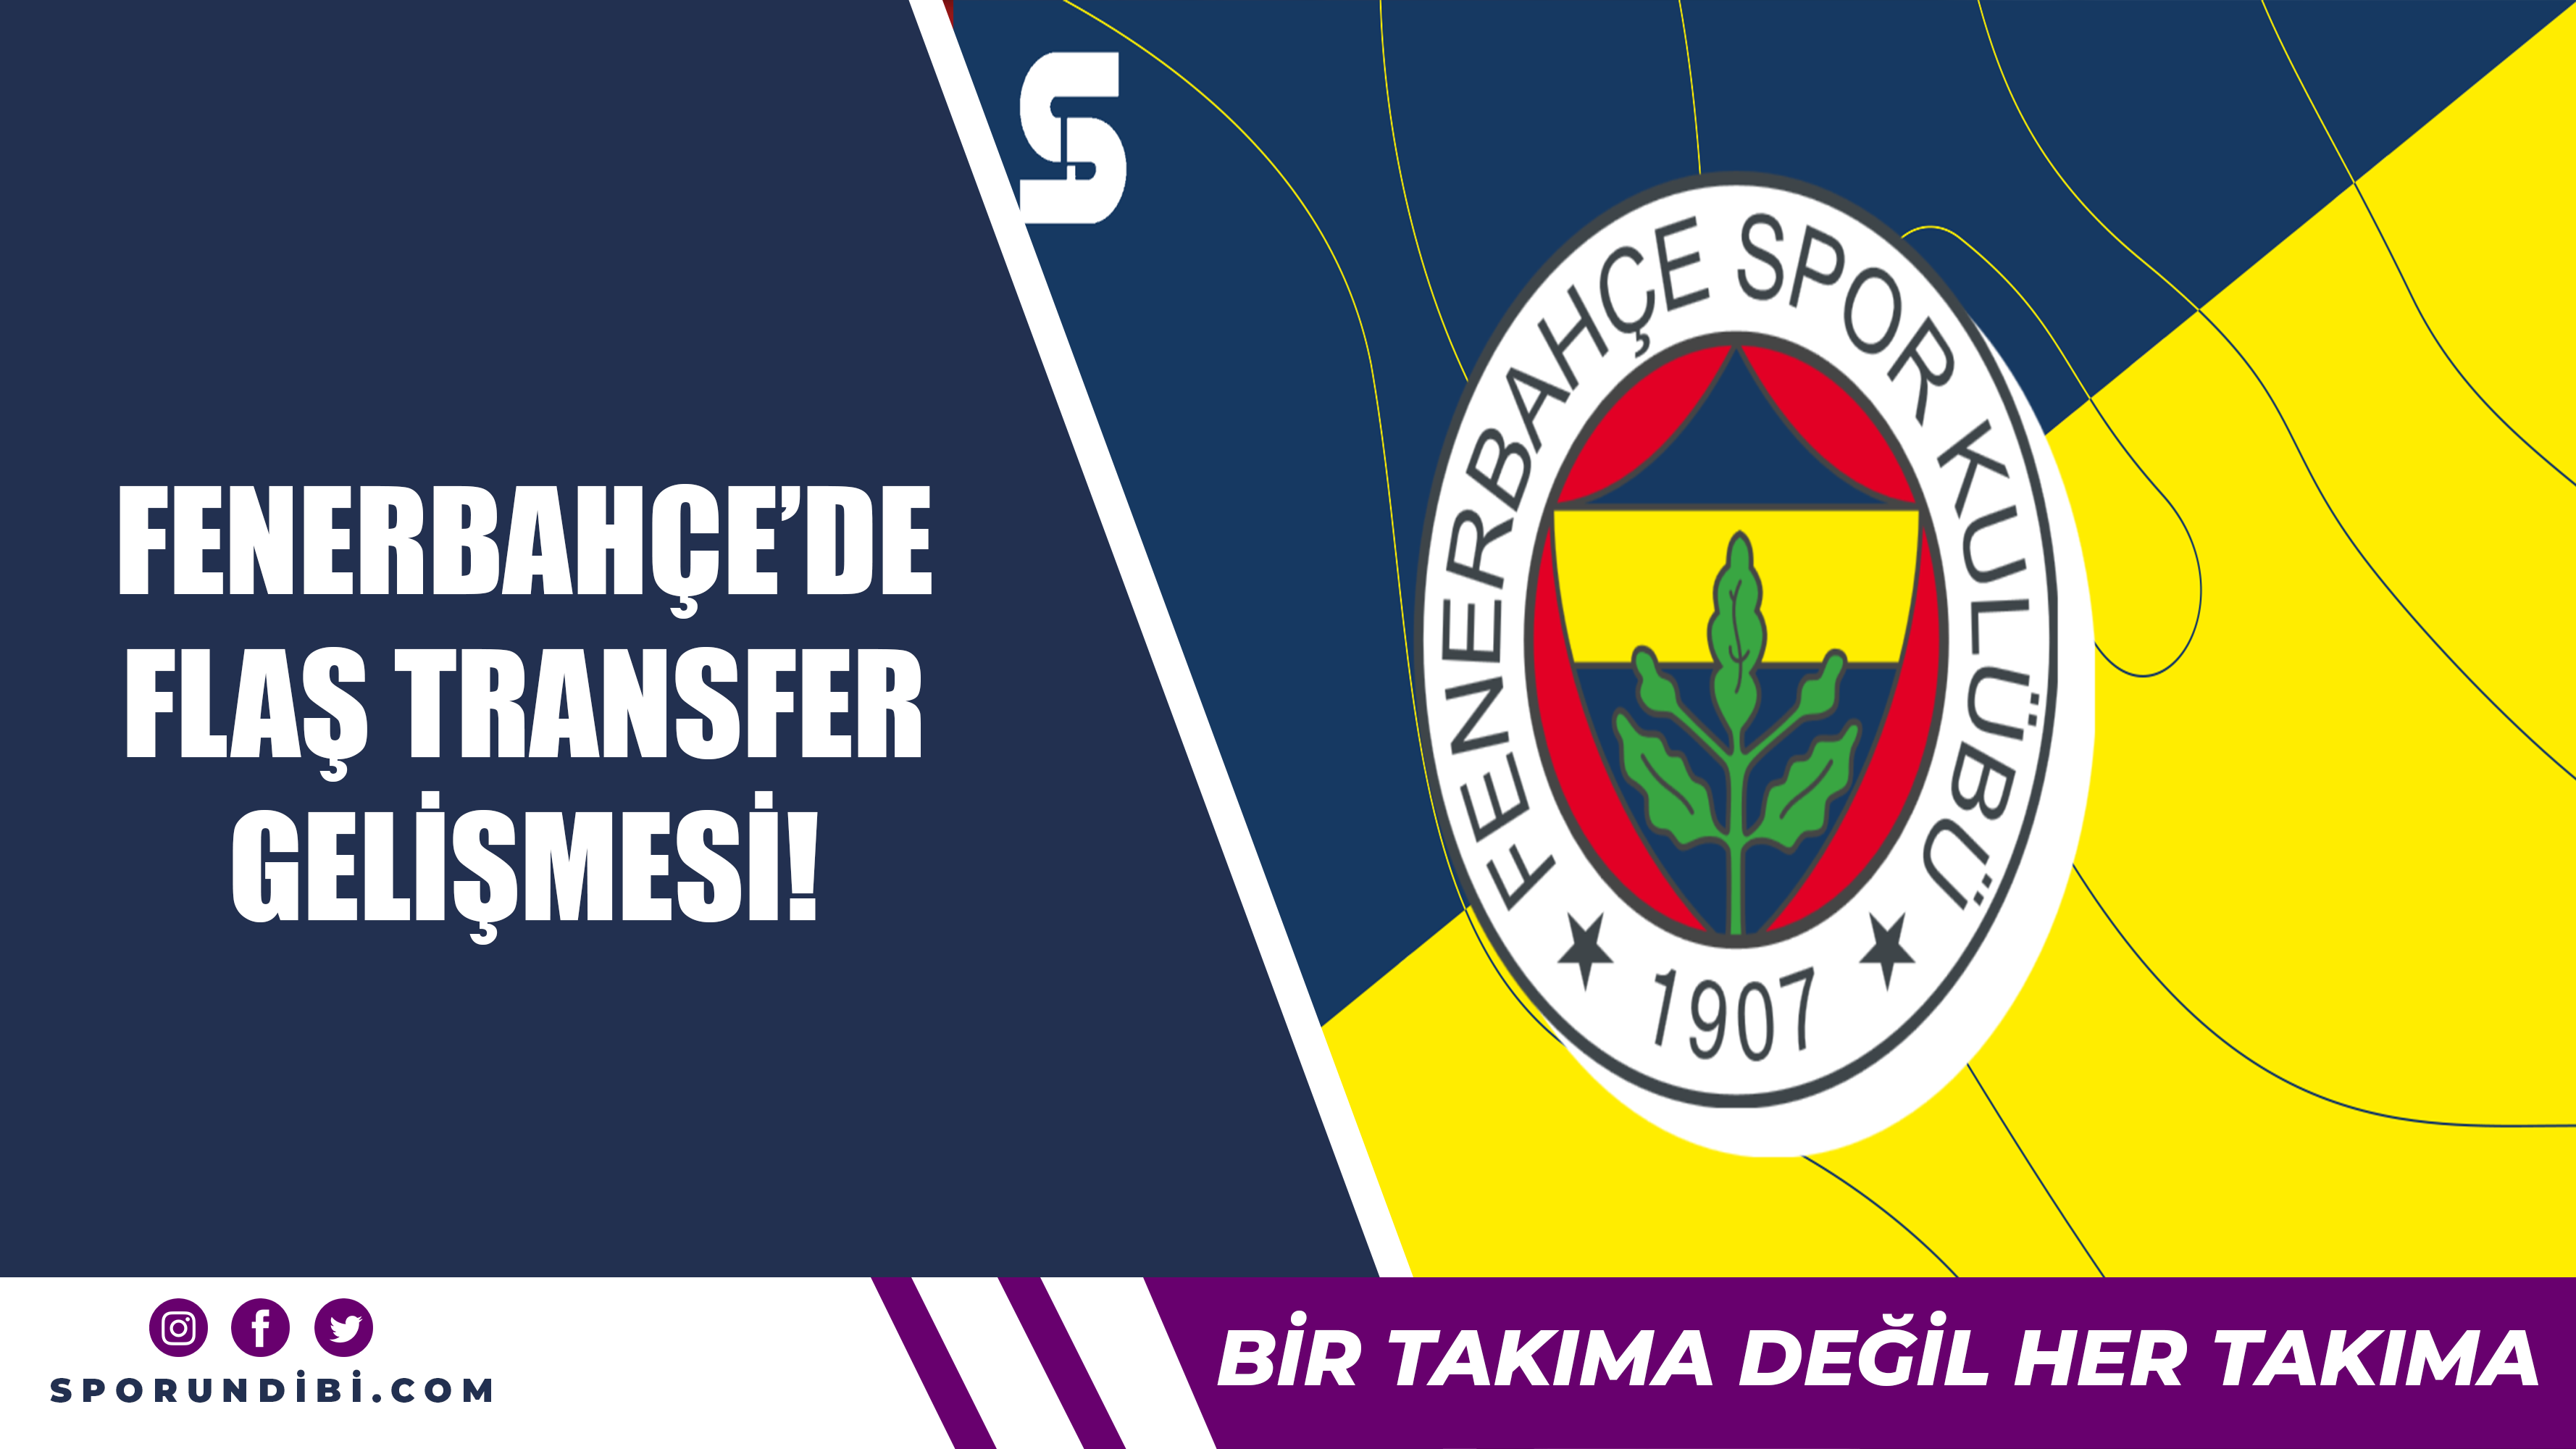 Fenerbahçe'de flaş transfer gelişmesi!